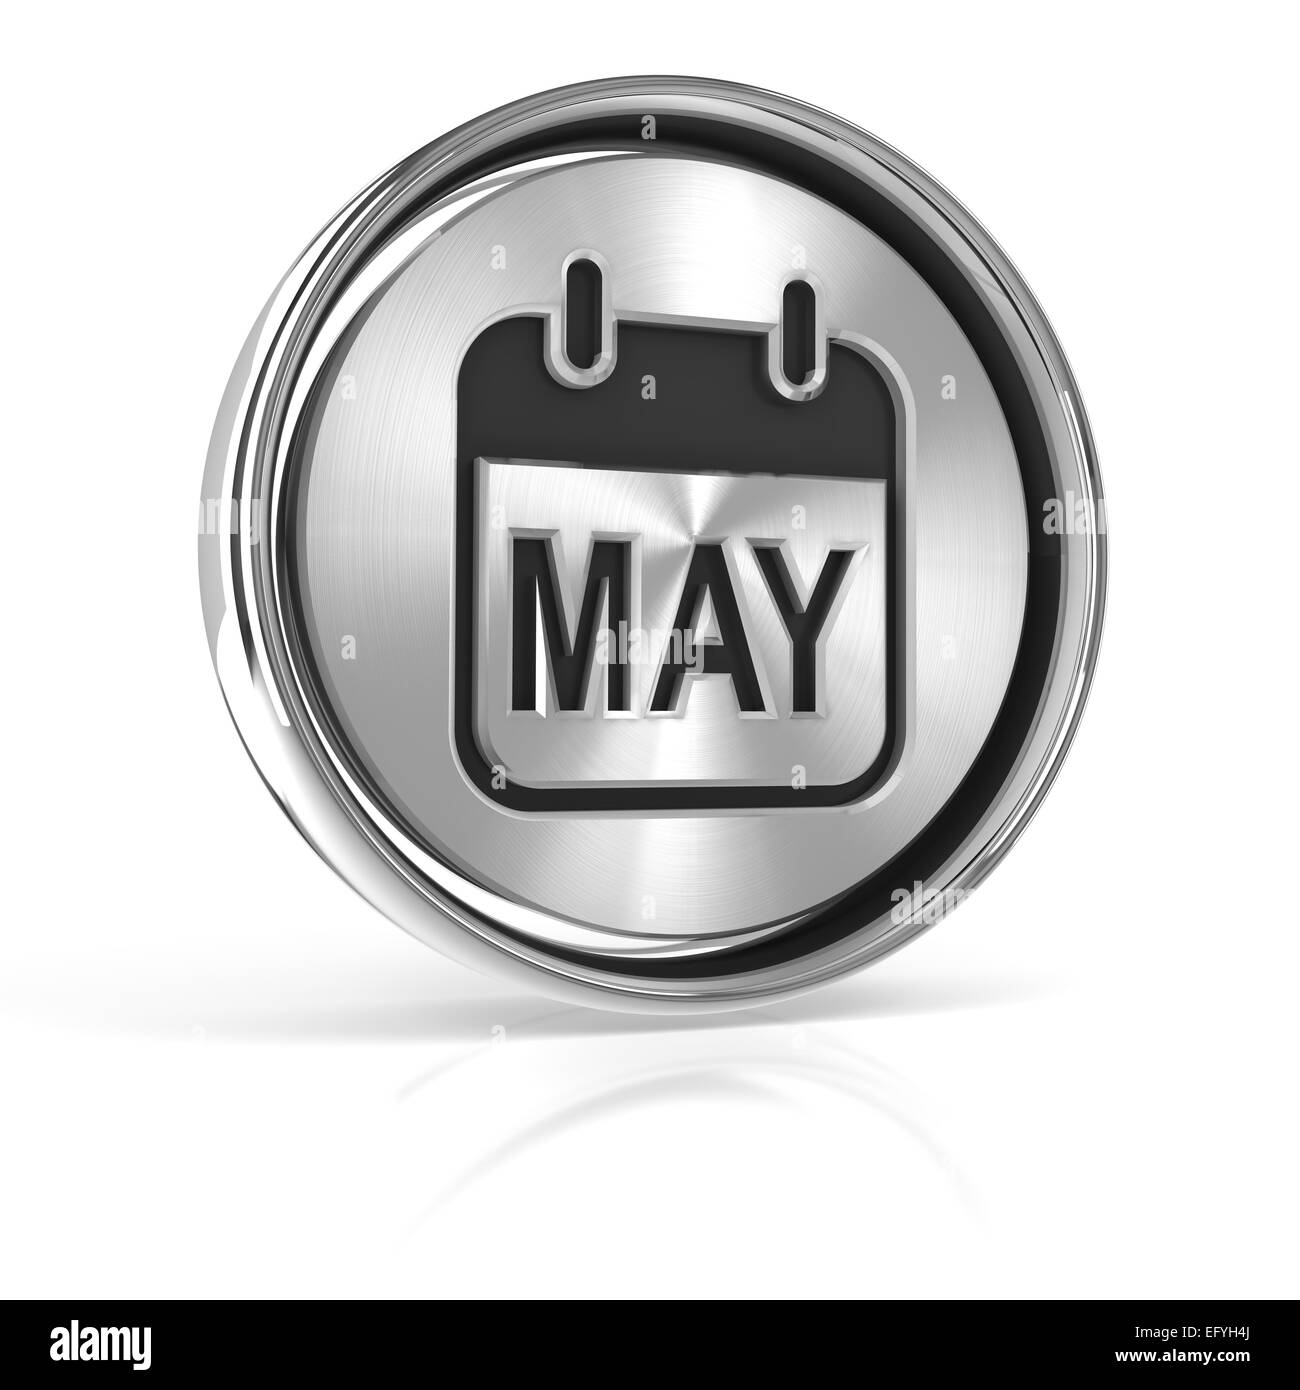 Metallic may calendar icon Stock Photo